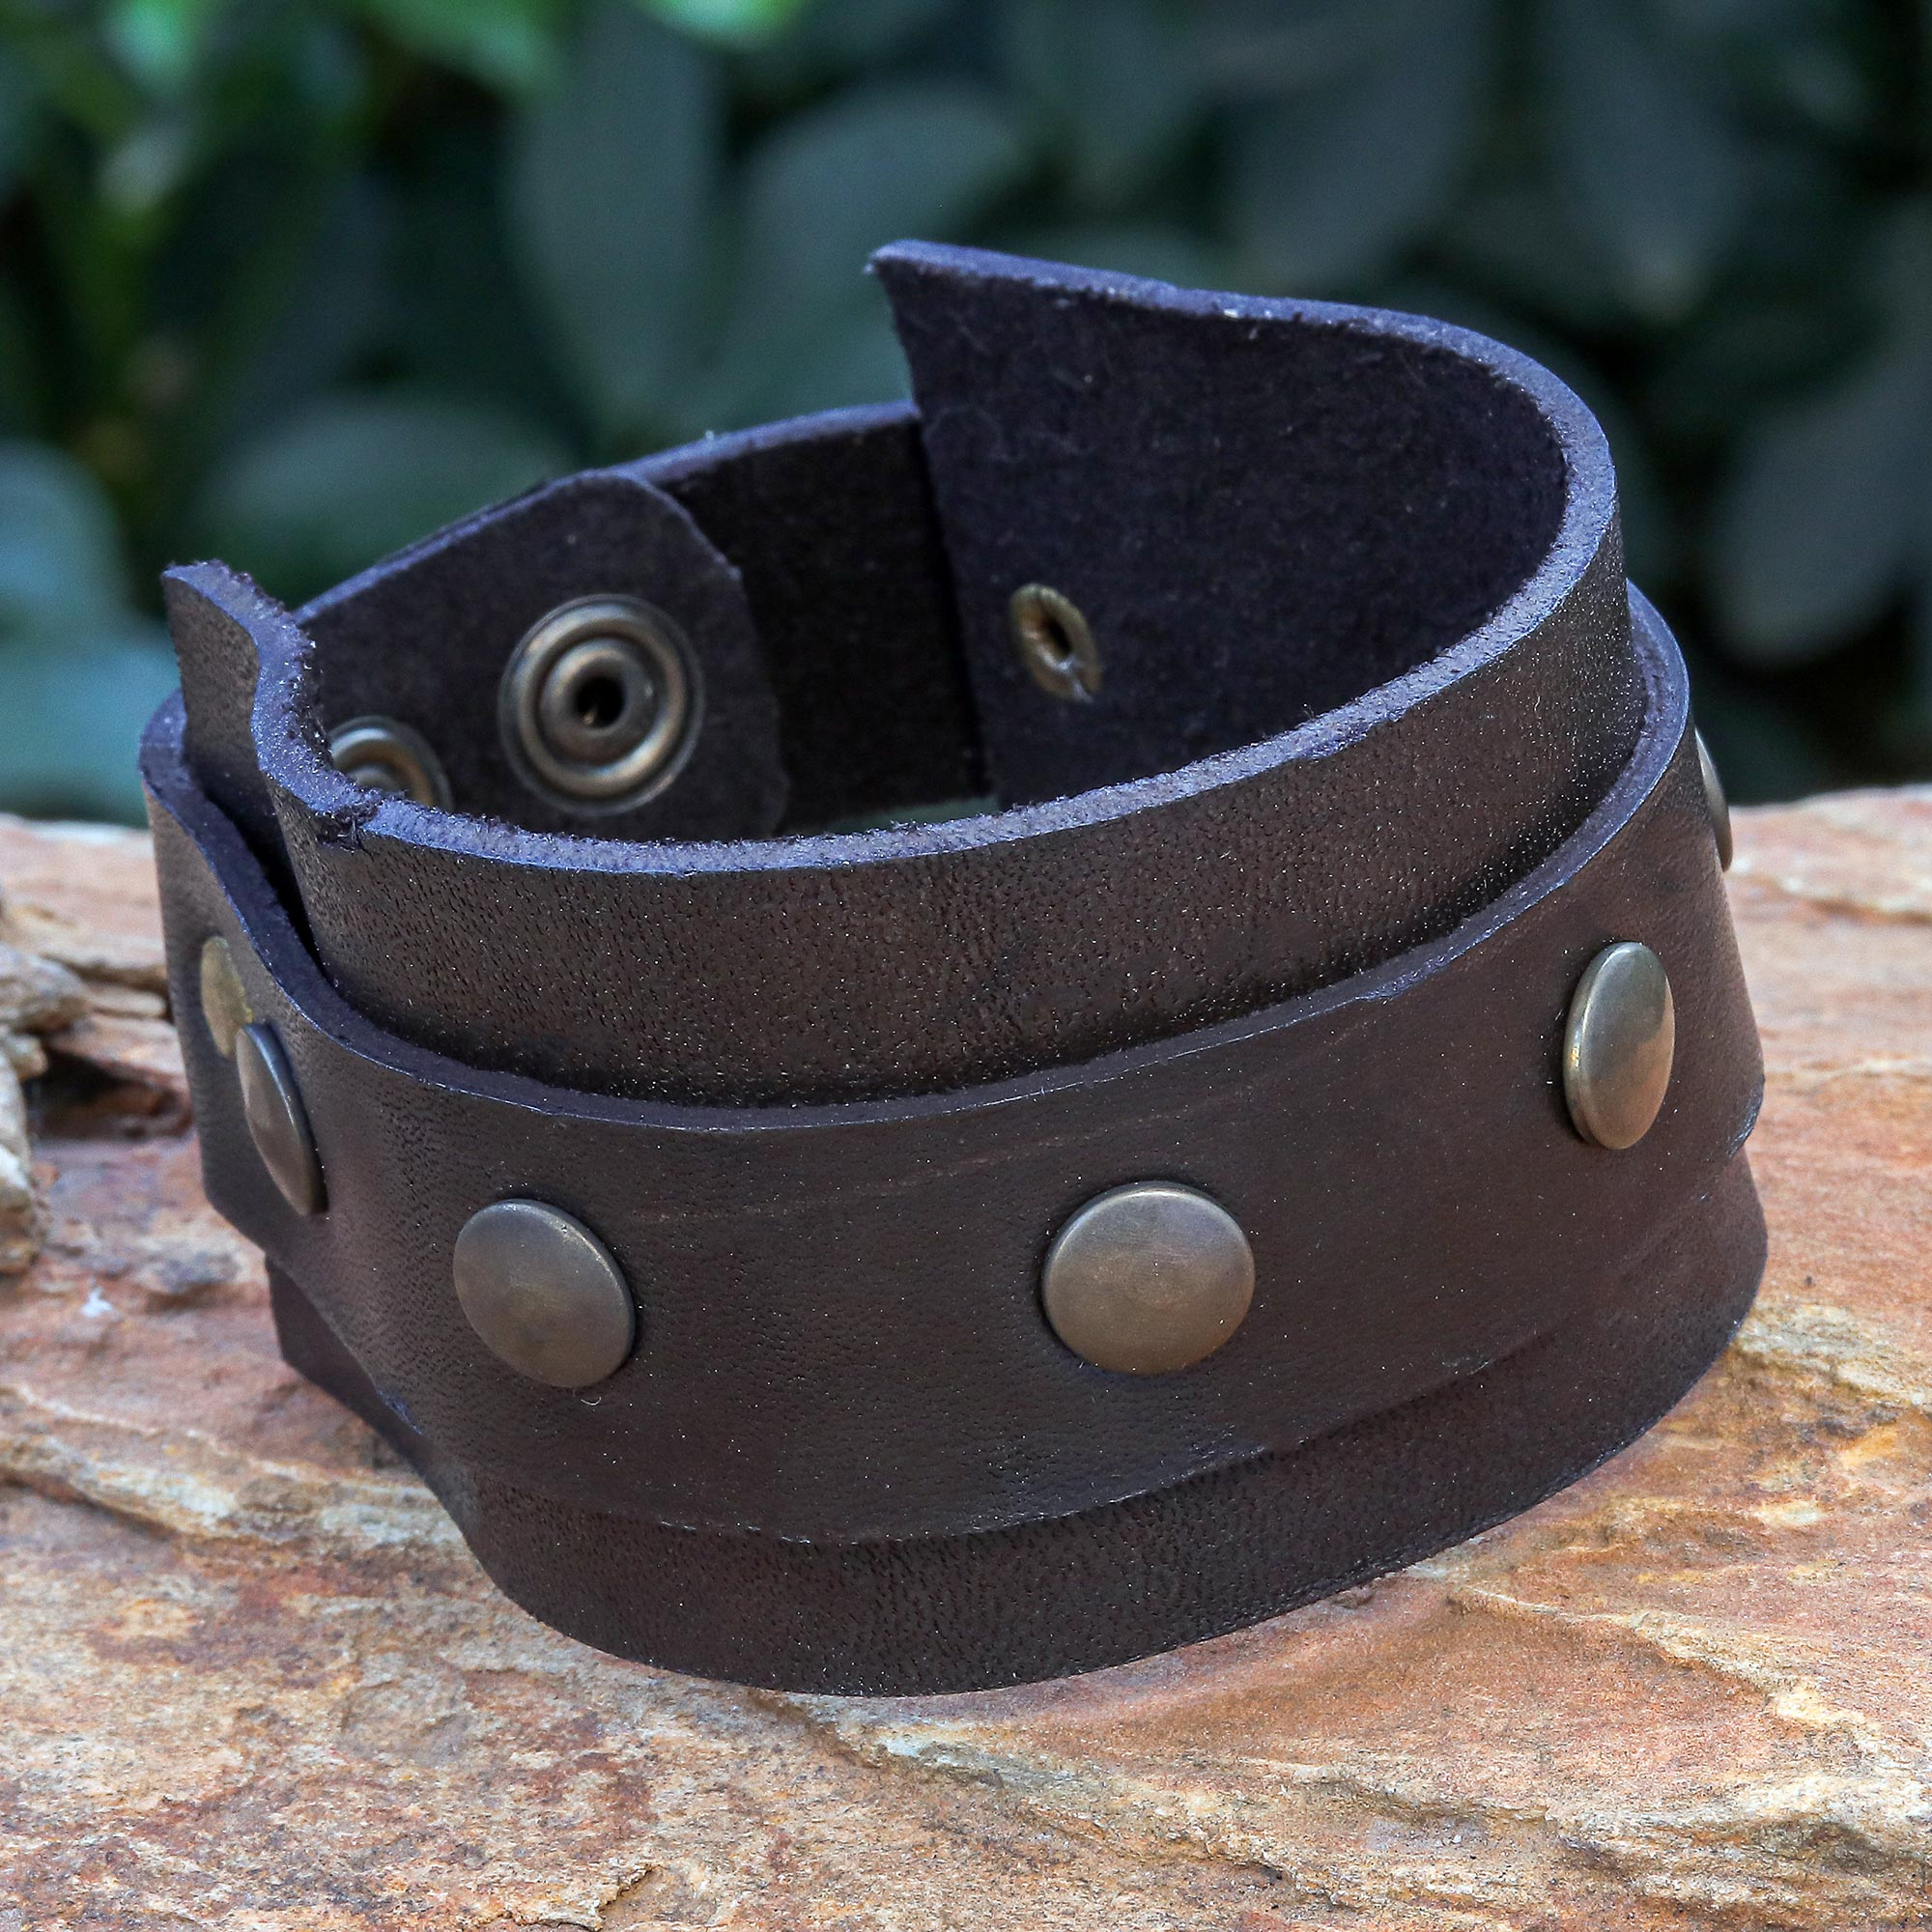 Men's Wide Leather Belt Strap Buckle Adjustable Cuff Bangle Wristband  Bracelet